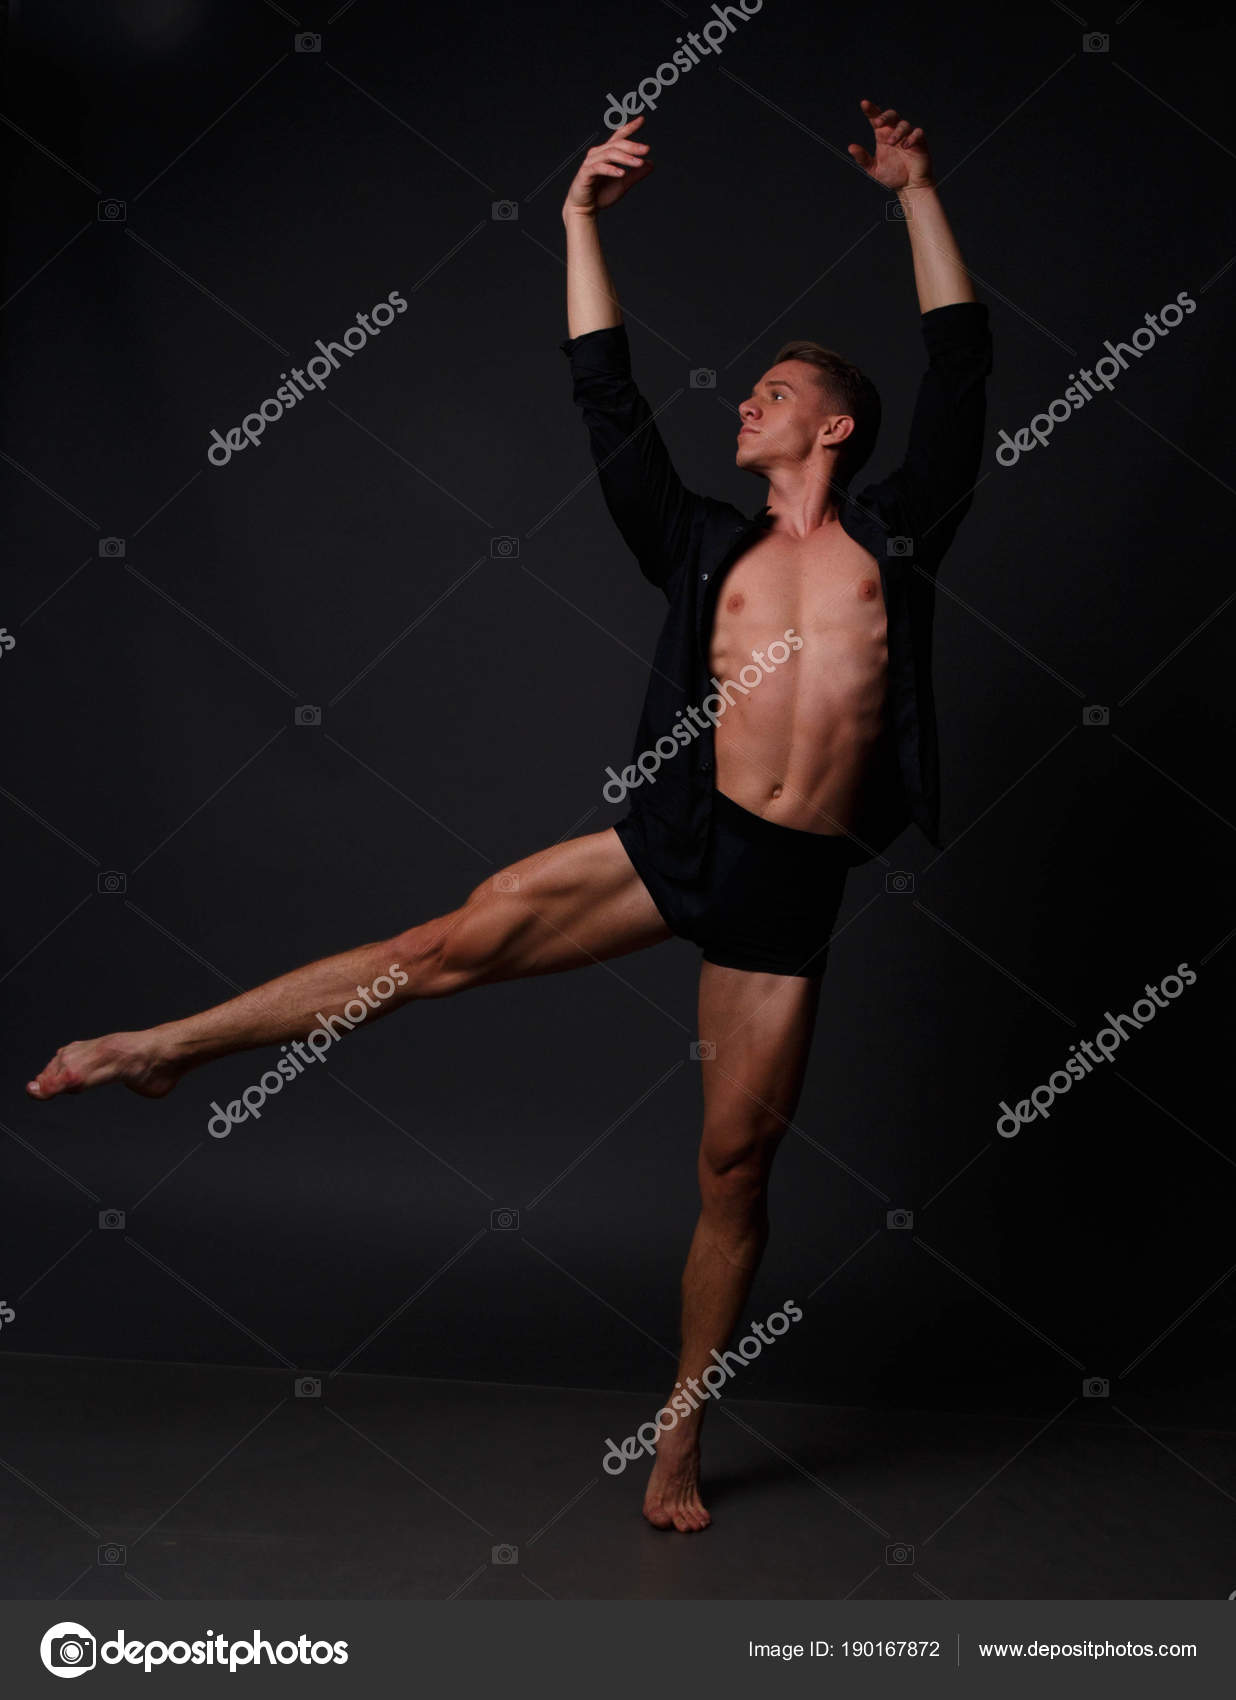 Mandedanse, koncept, ballet — Stock-foto © NeyaO #190167872